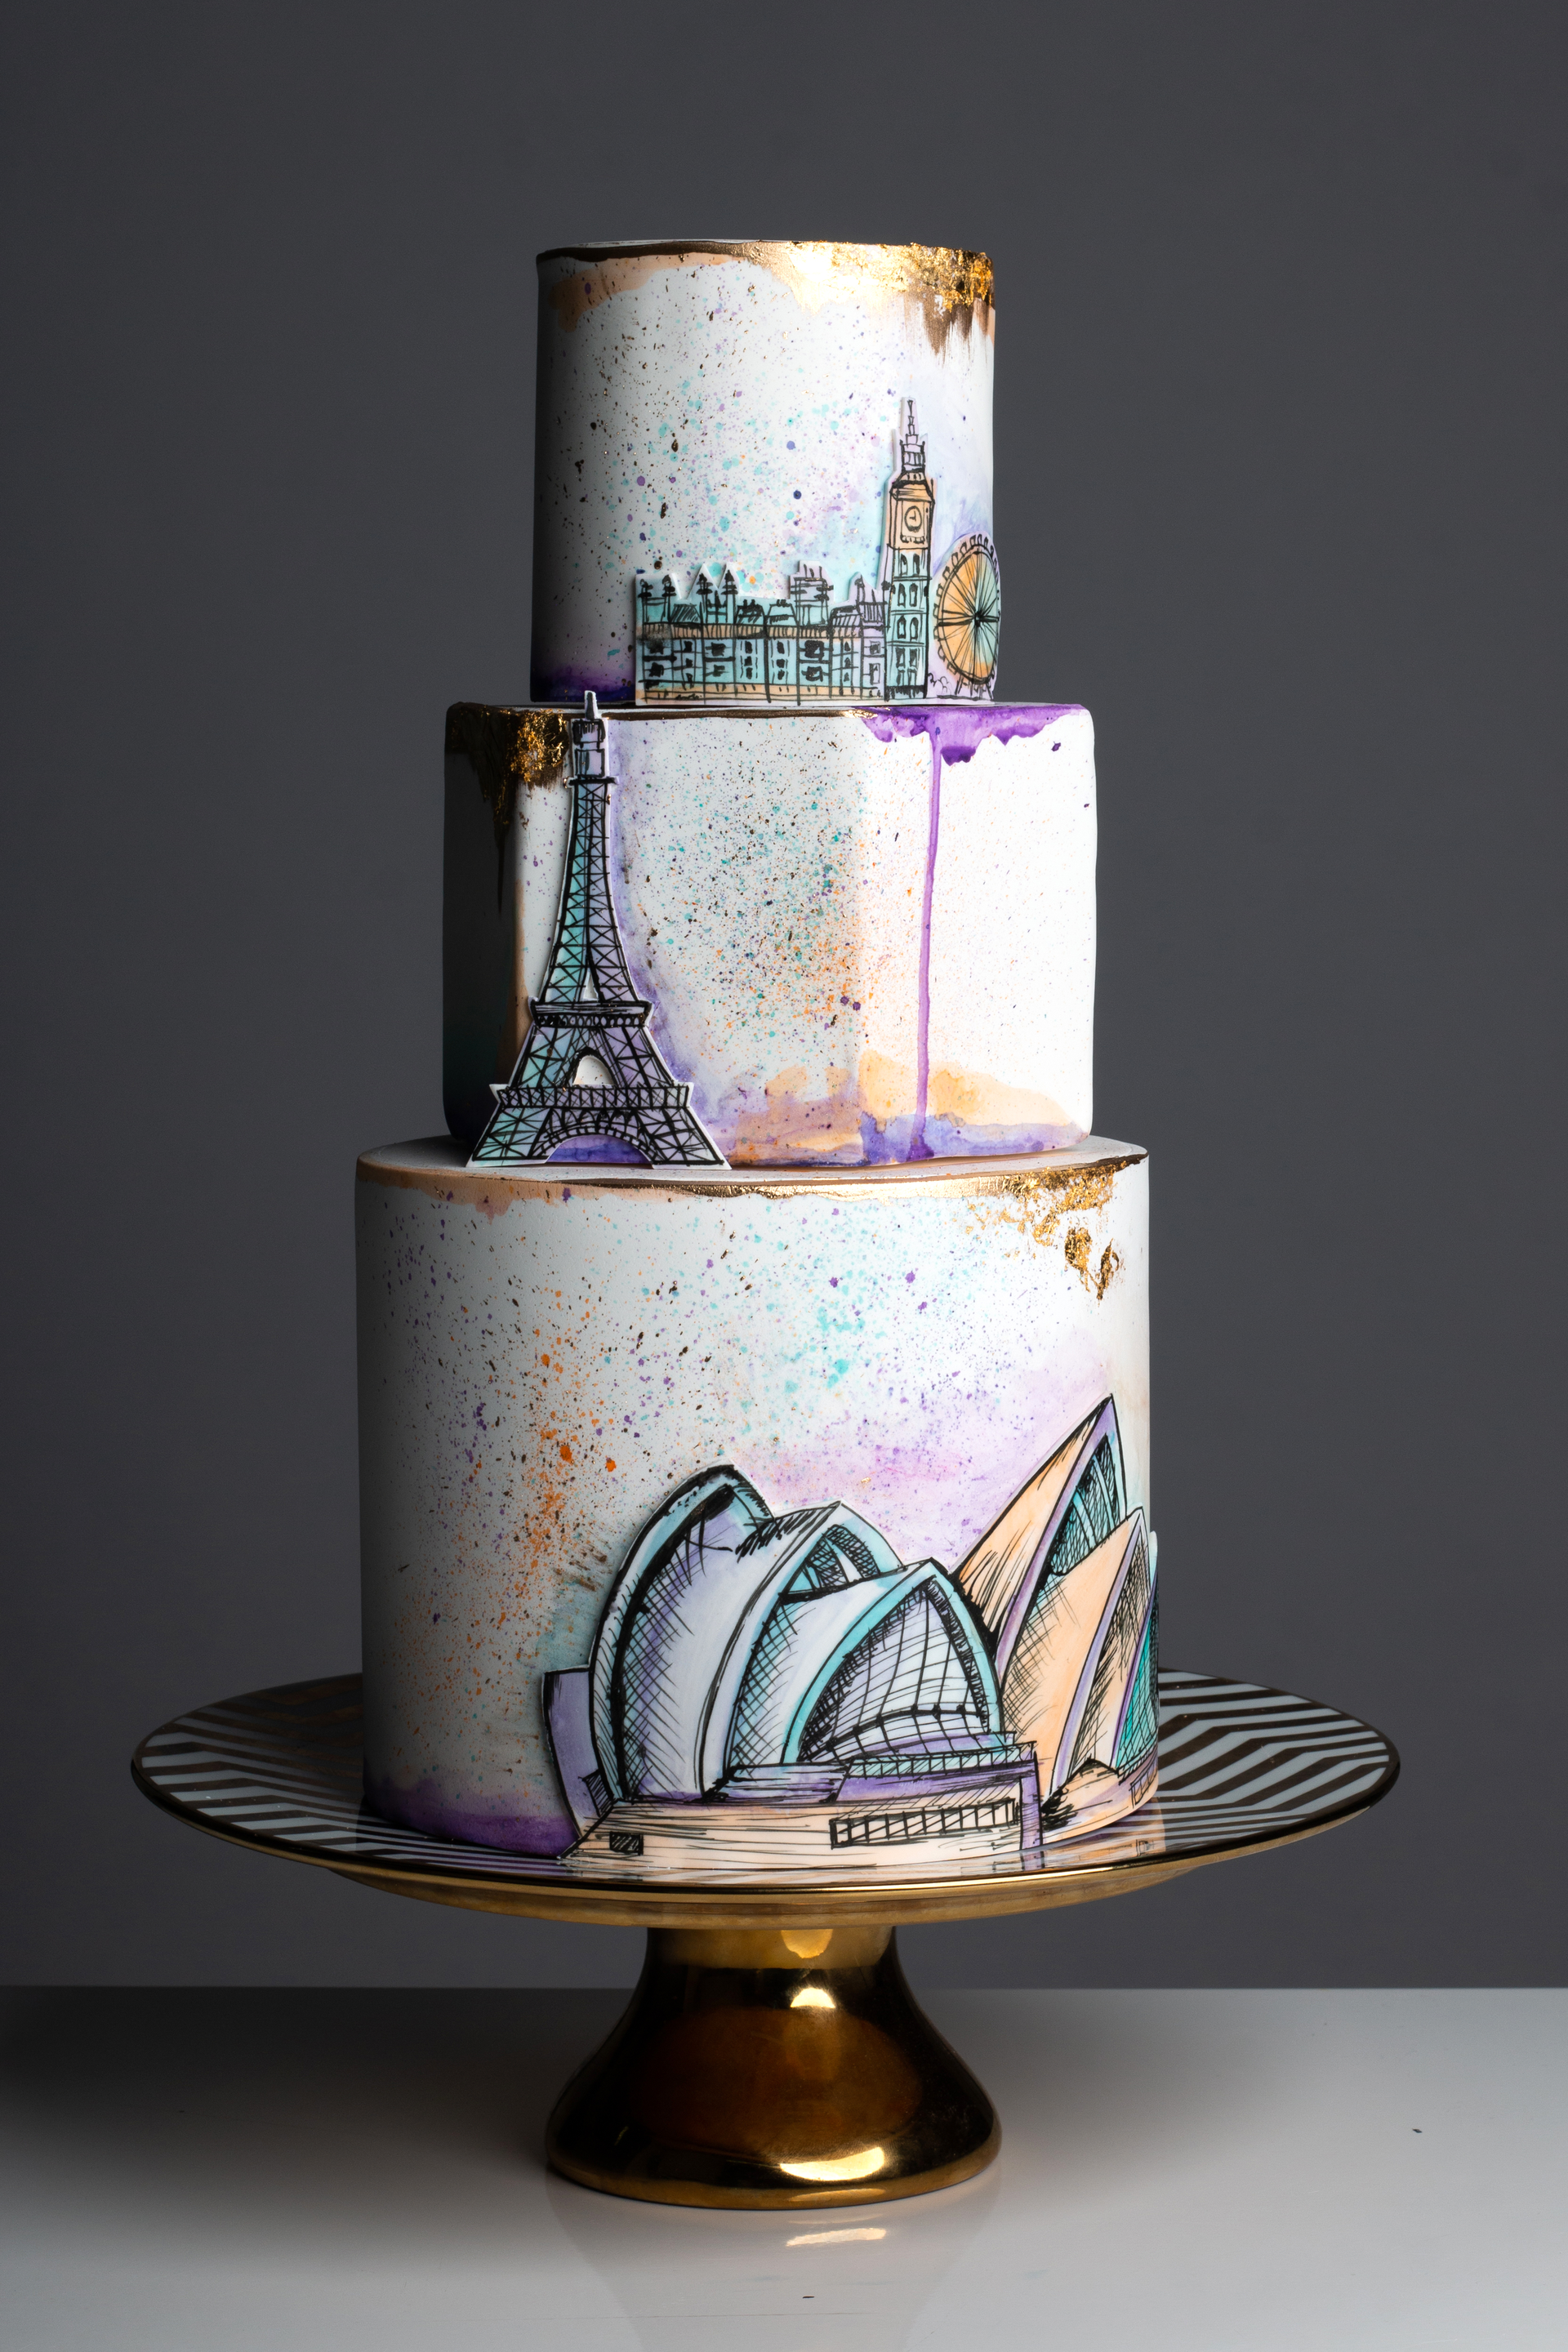 Wedding Cupcake Tower e Torta Double Chocolate  Picture of Sweet and Cake  Lavagno  Tripadvisor